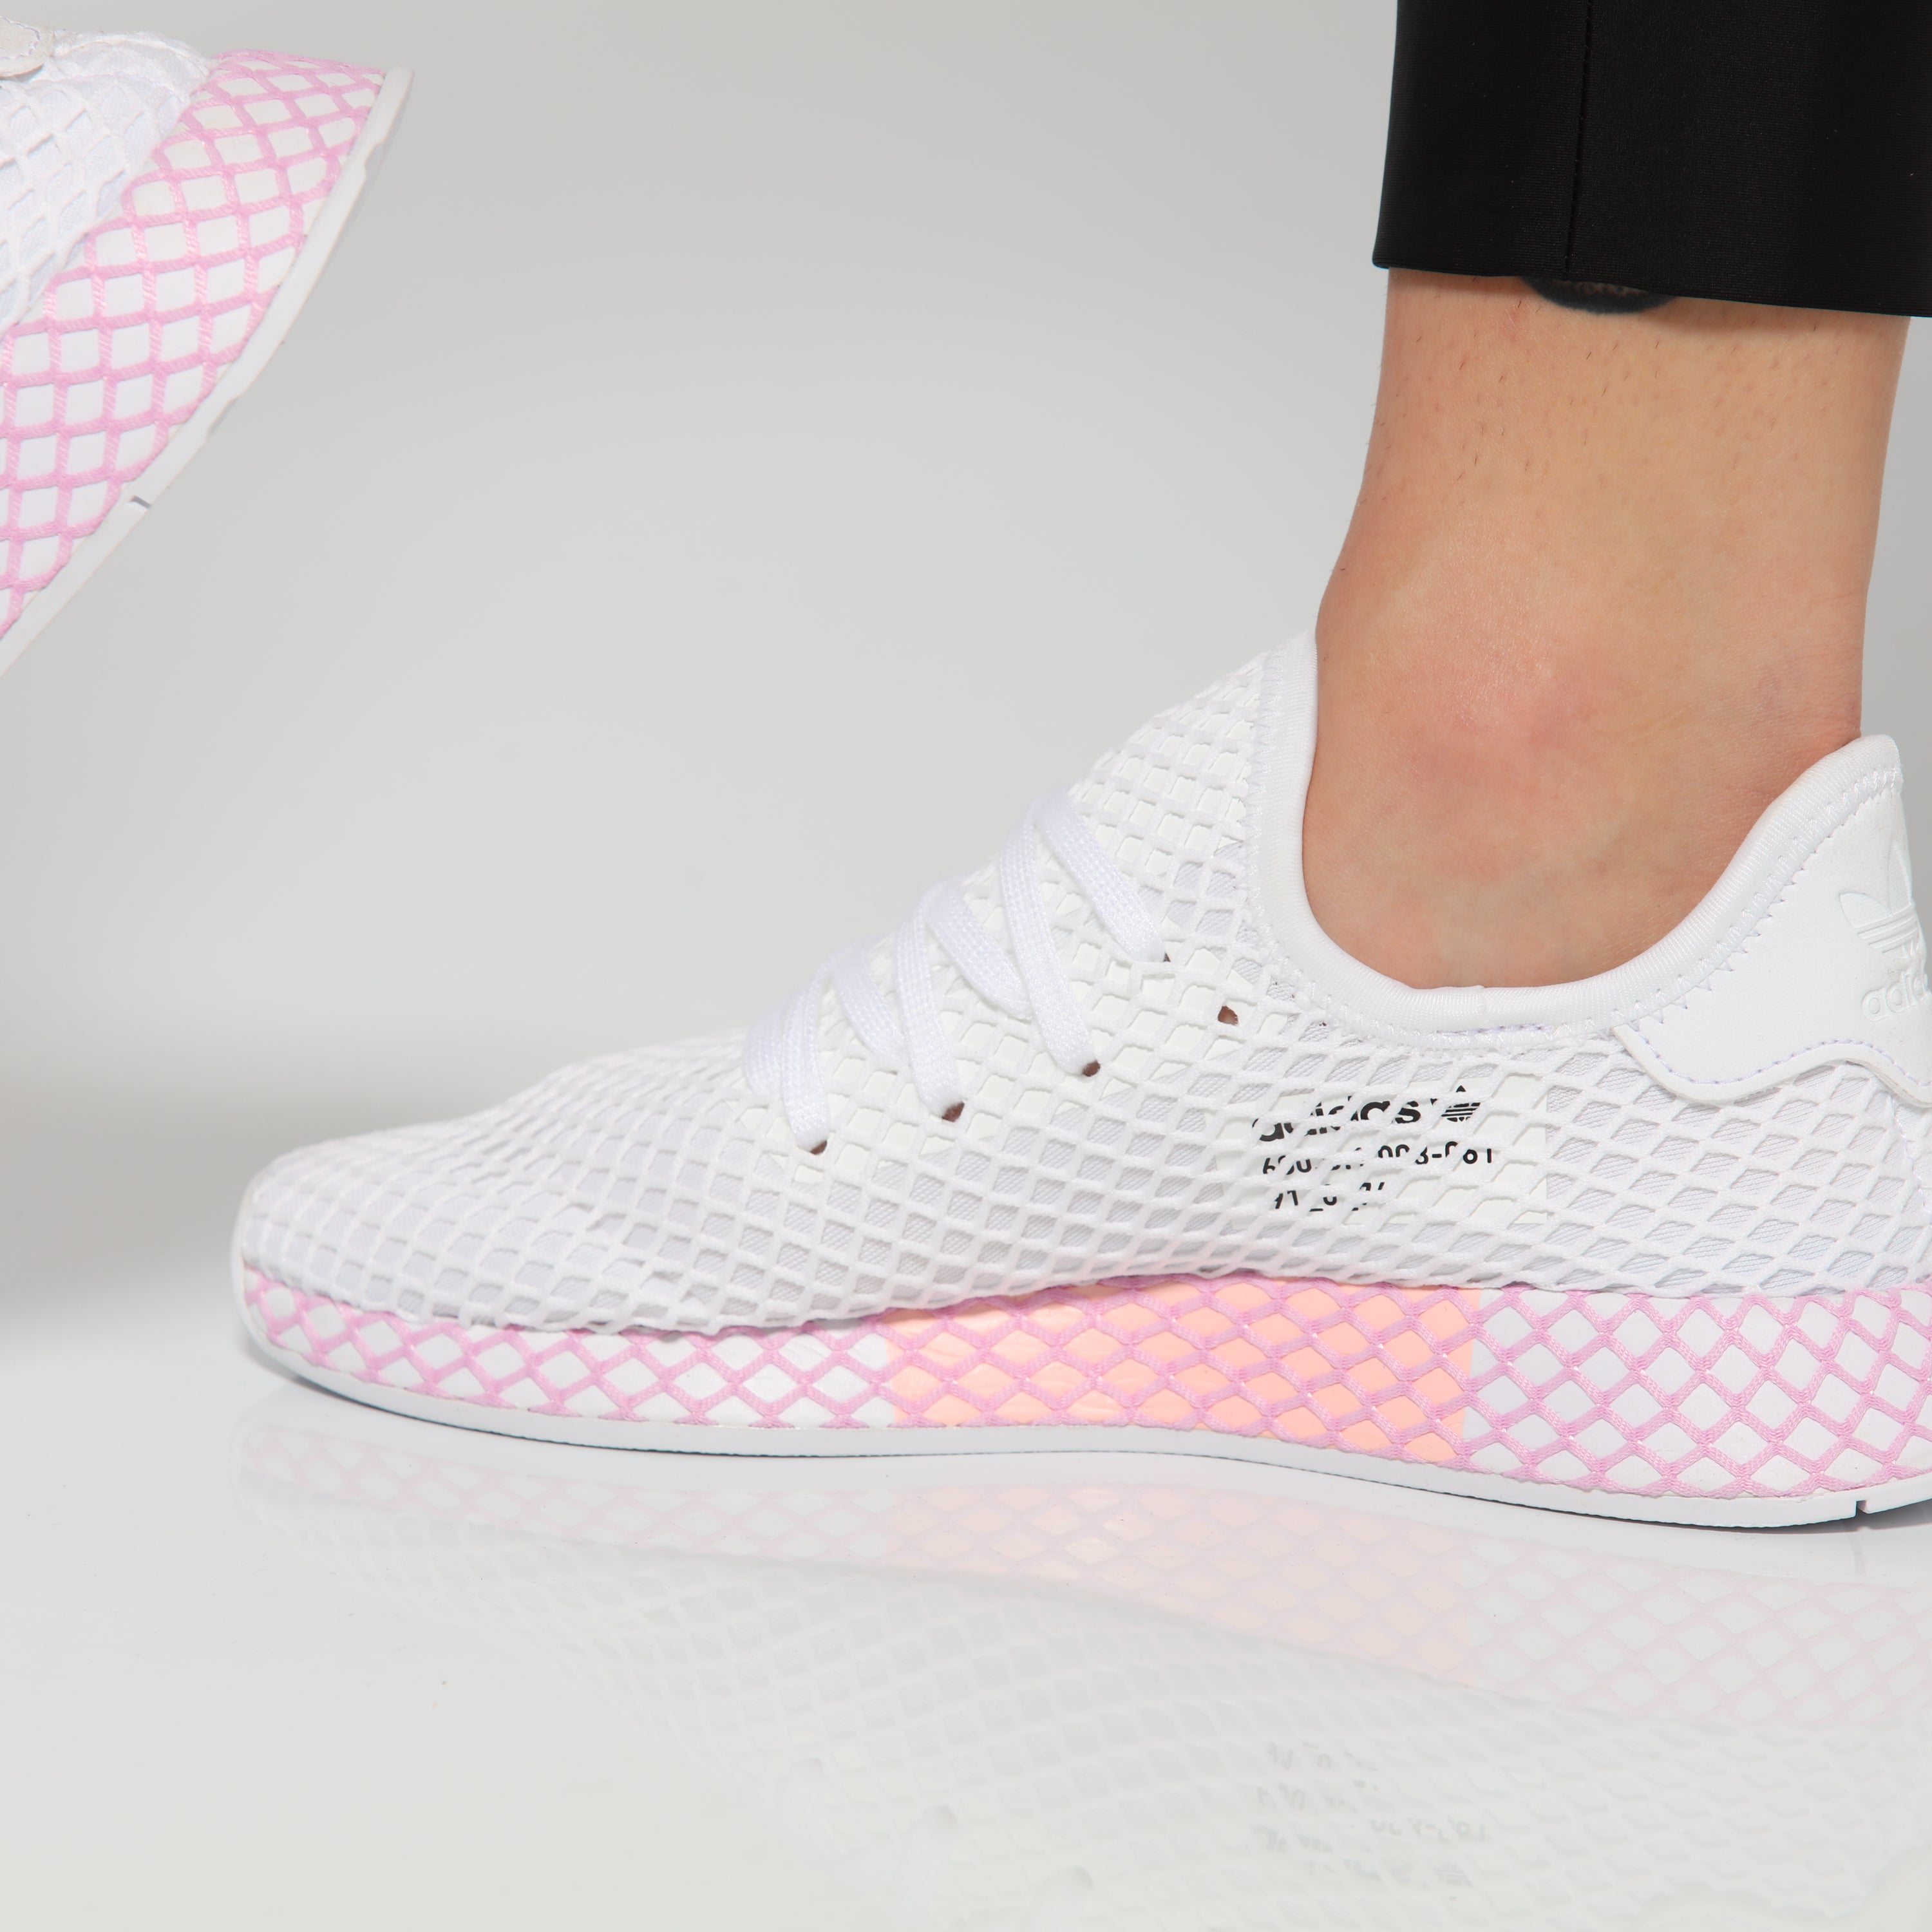 adidas deerupt pink white